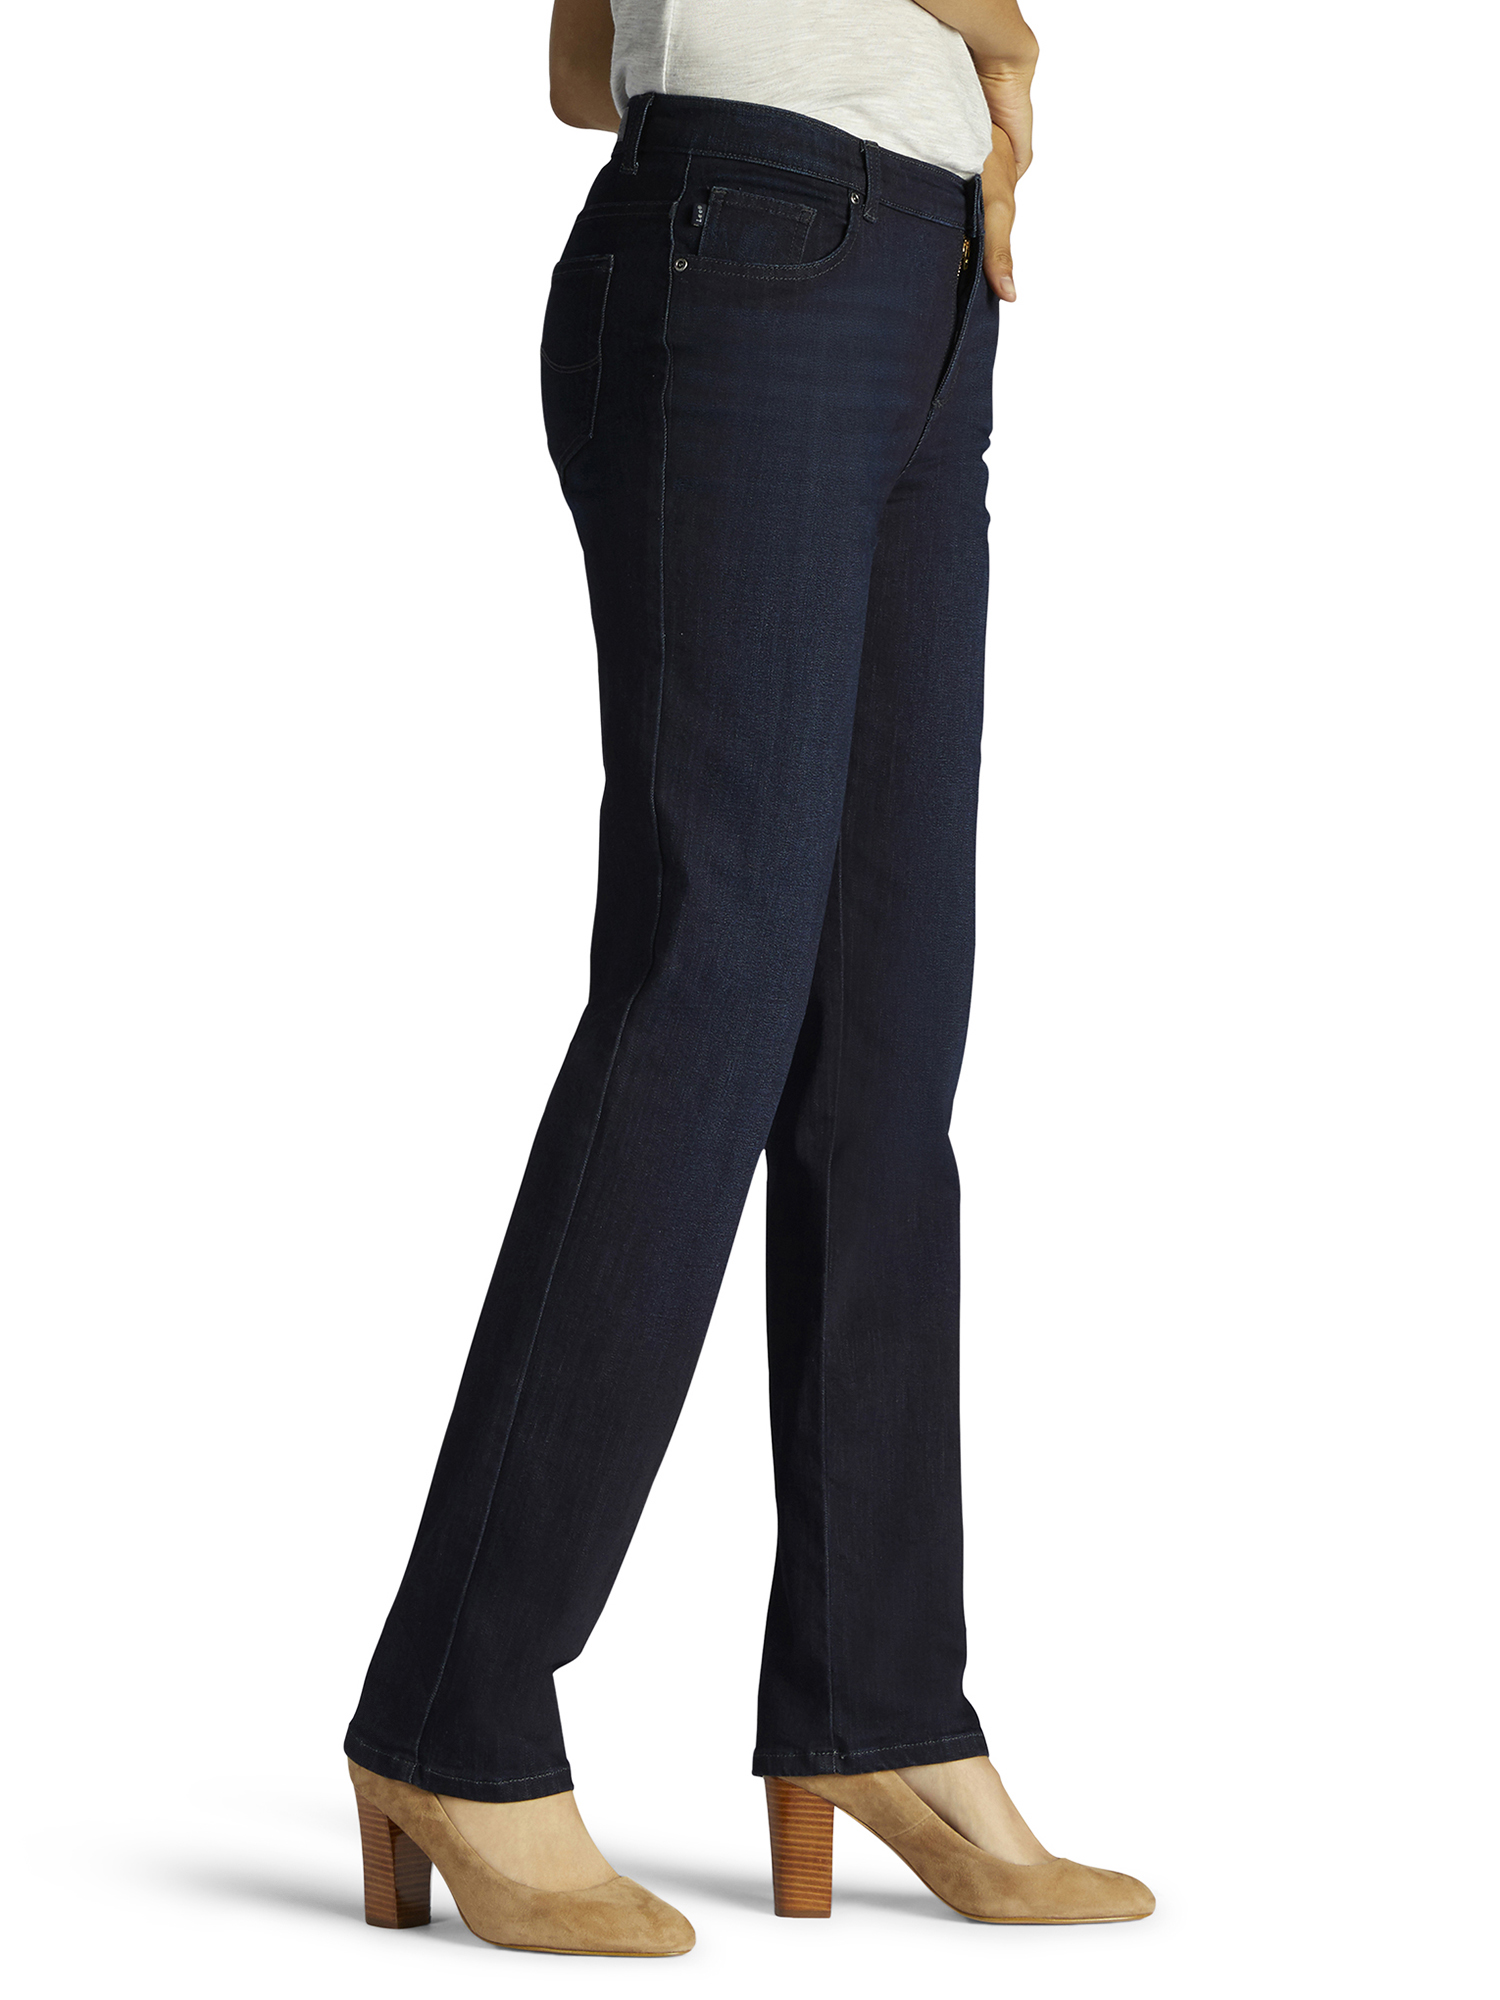 Lee Women's Relaxed Fit Straight Leg Jeans - Walmart.com